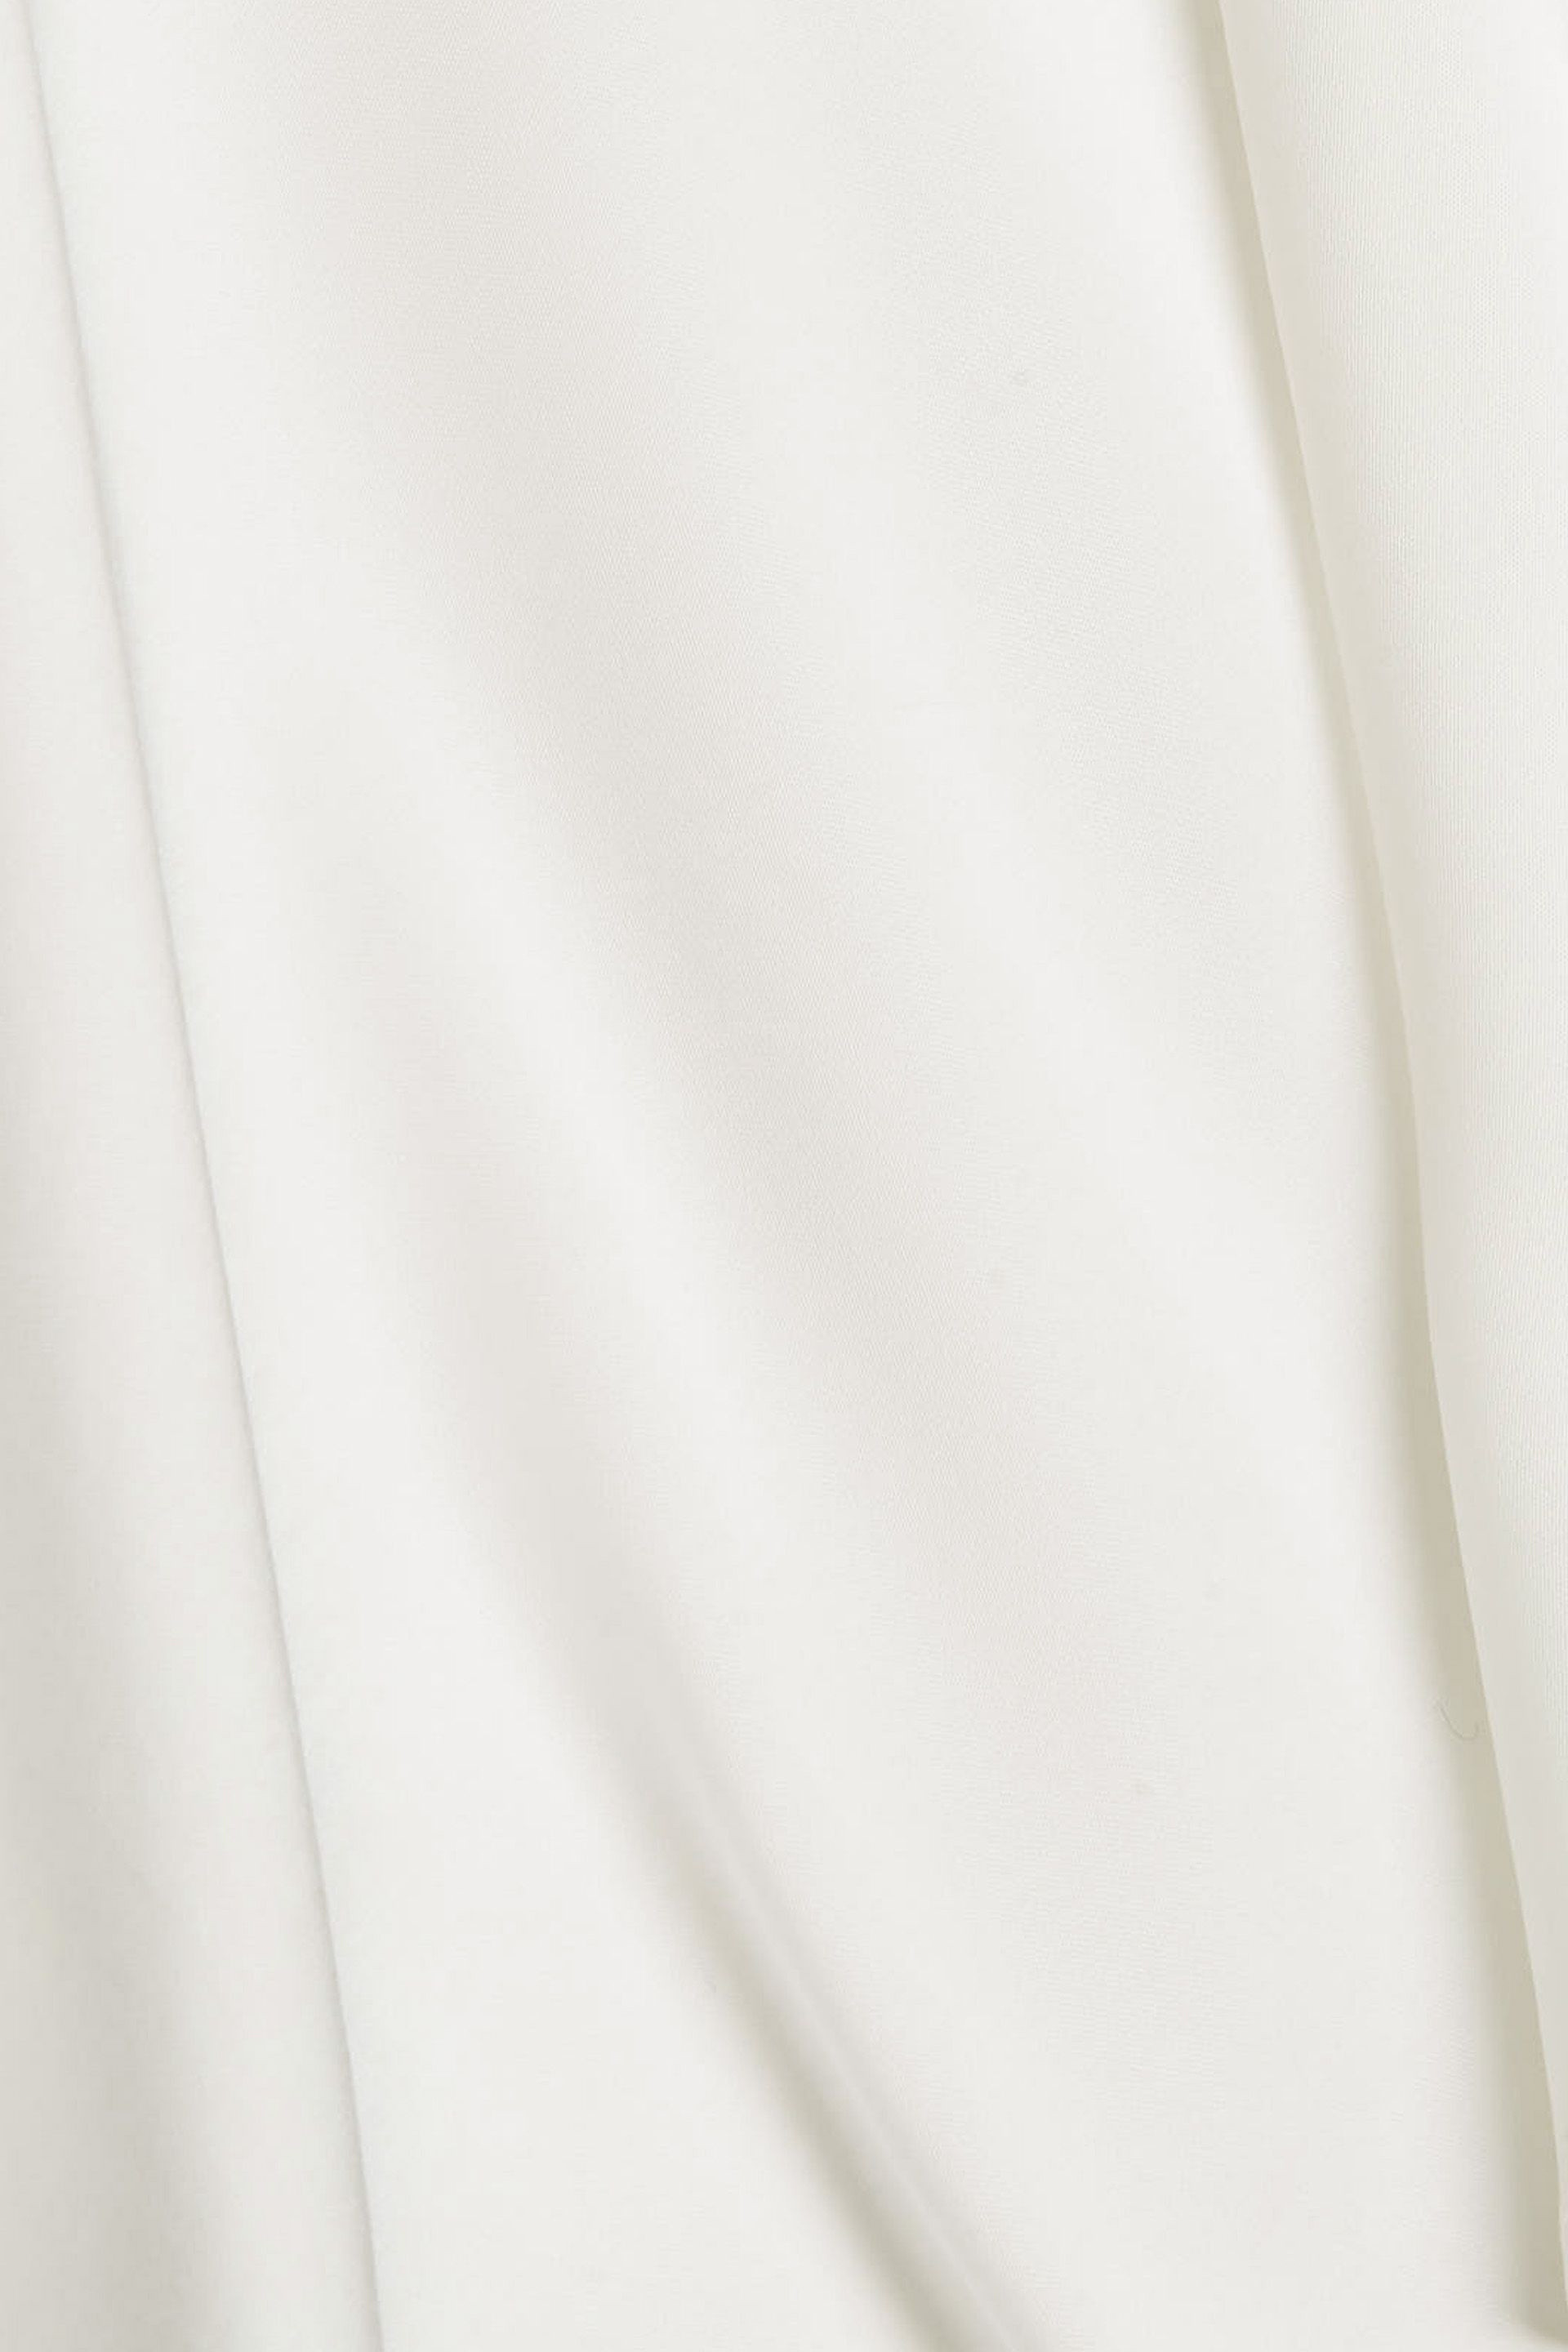 Blusa a maniche corte effetto seta, Bianco, large image number 3